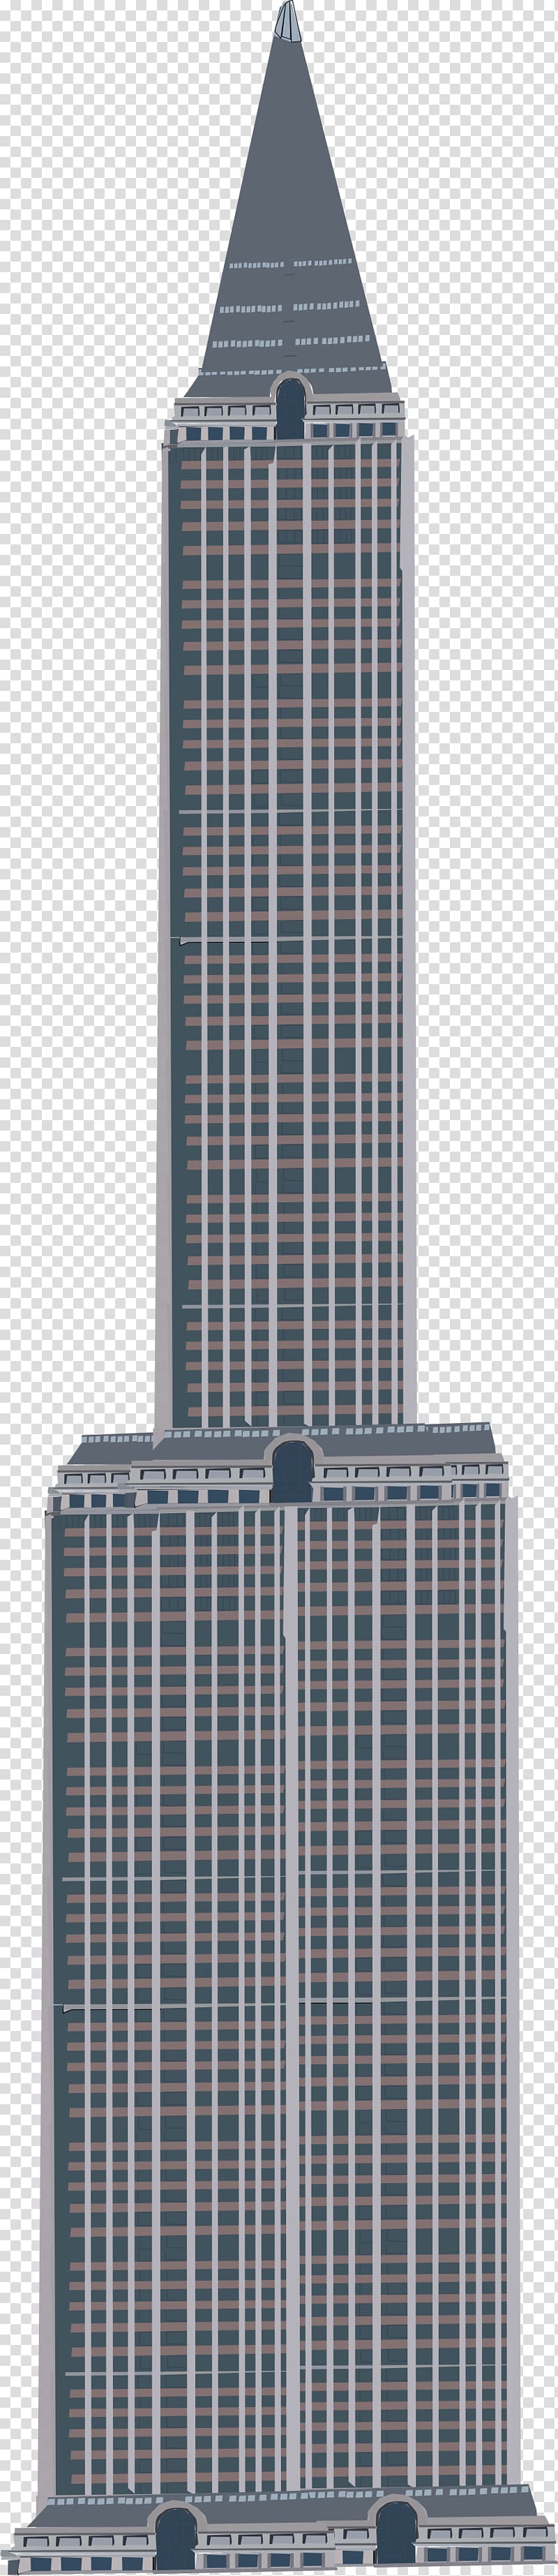 Skyscraper Facade Corporate headquarters Building, empire state buildin transparent background PNG clipart